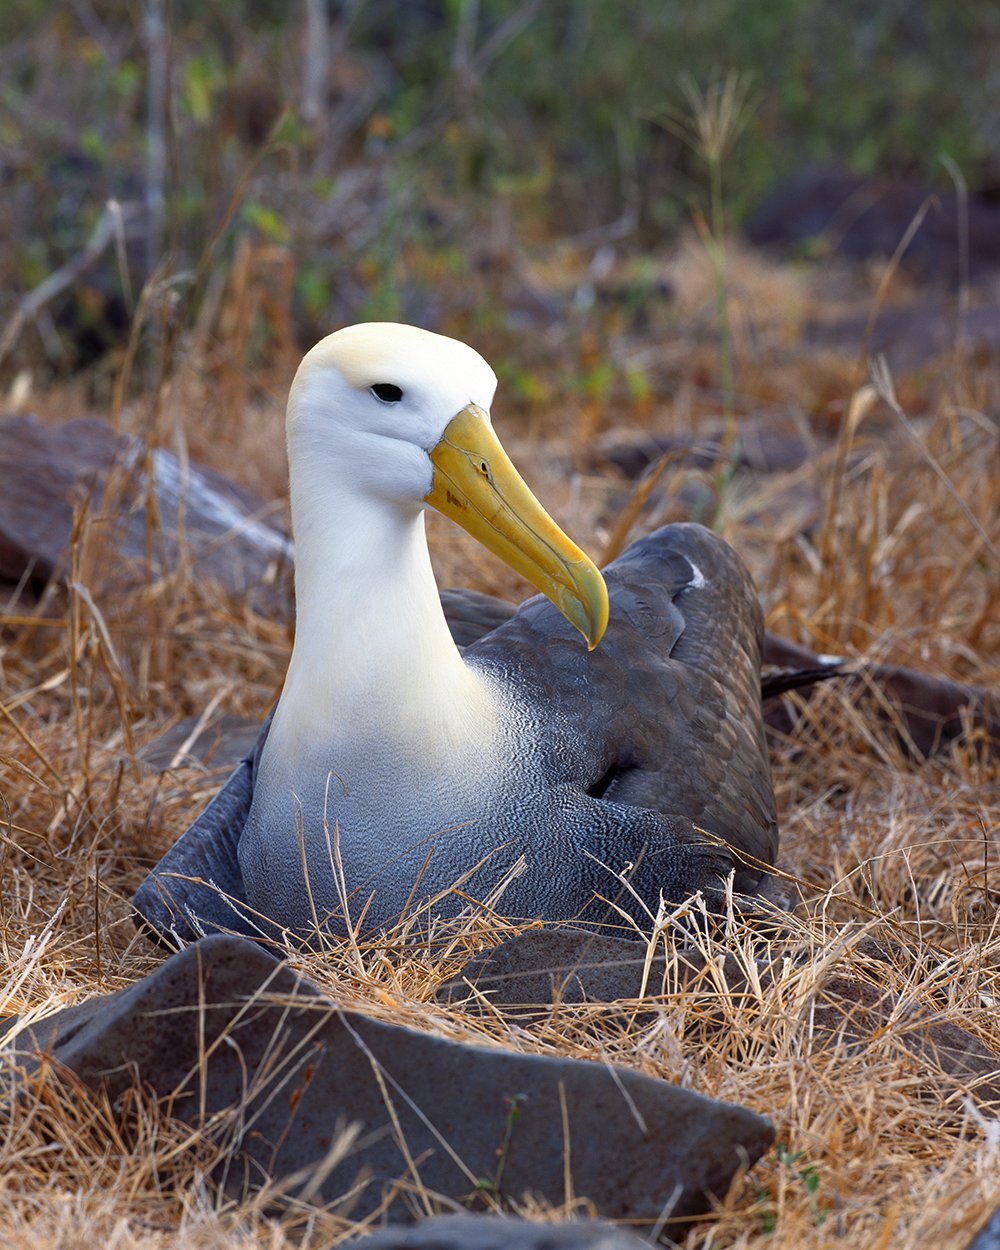 Galapagos Islands - Jim Zuckerman photography & photo tours